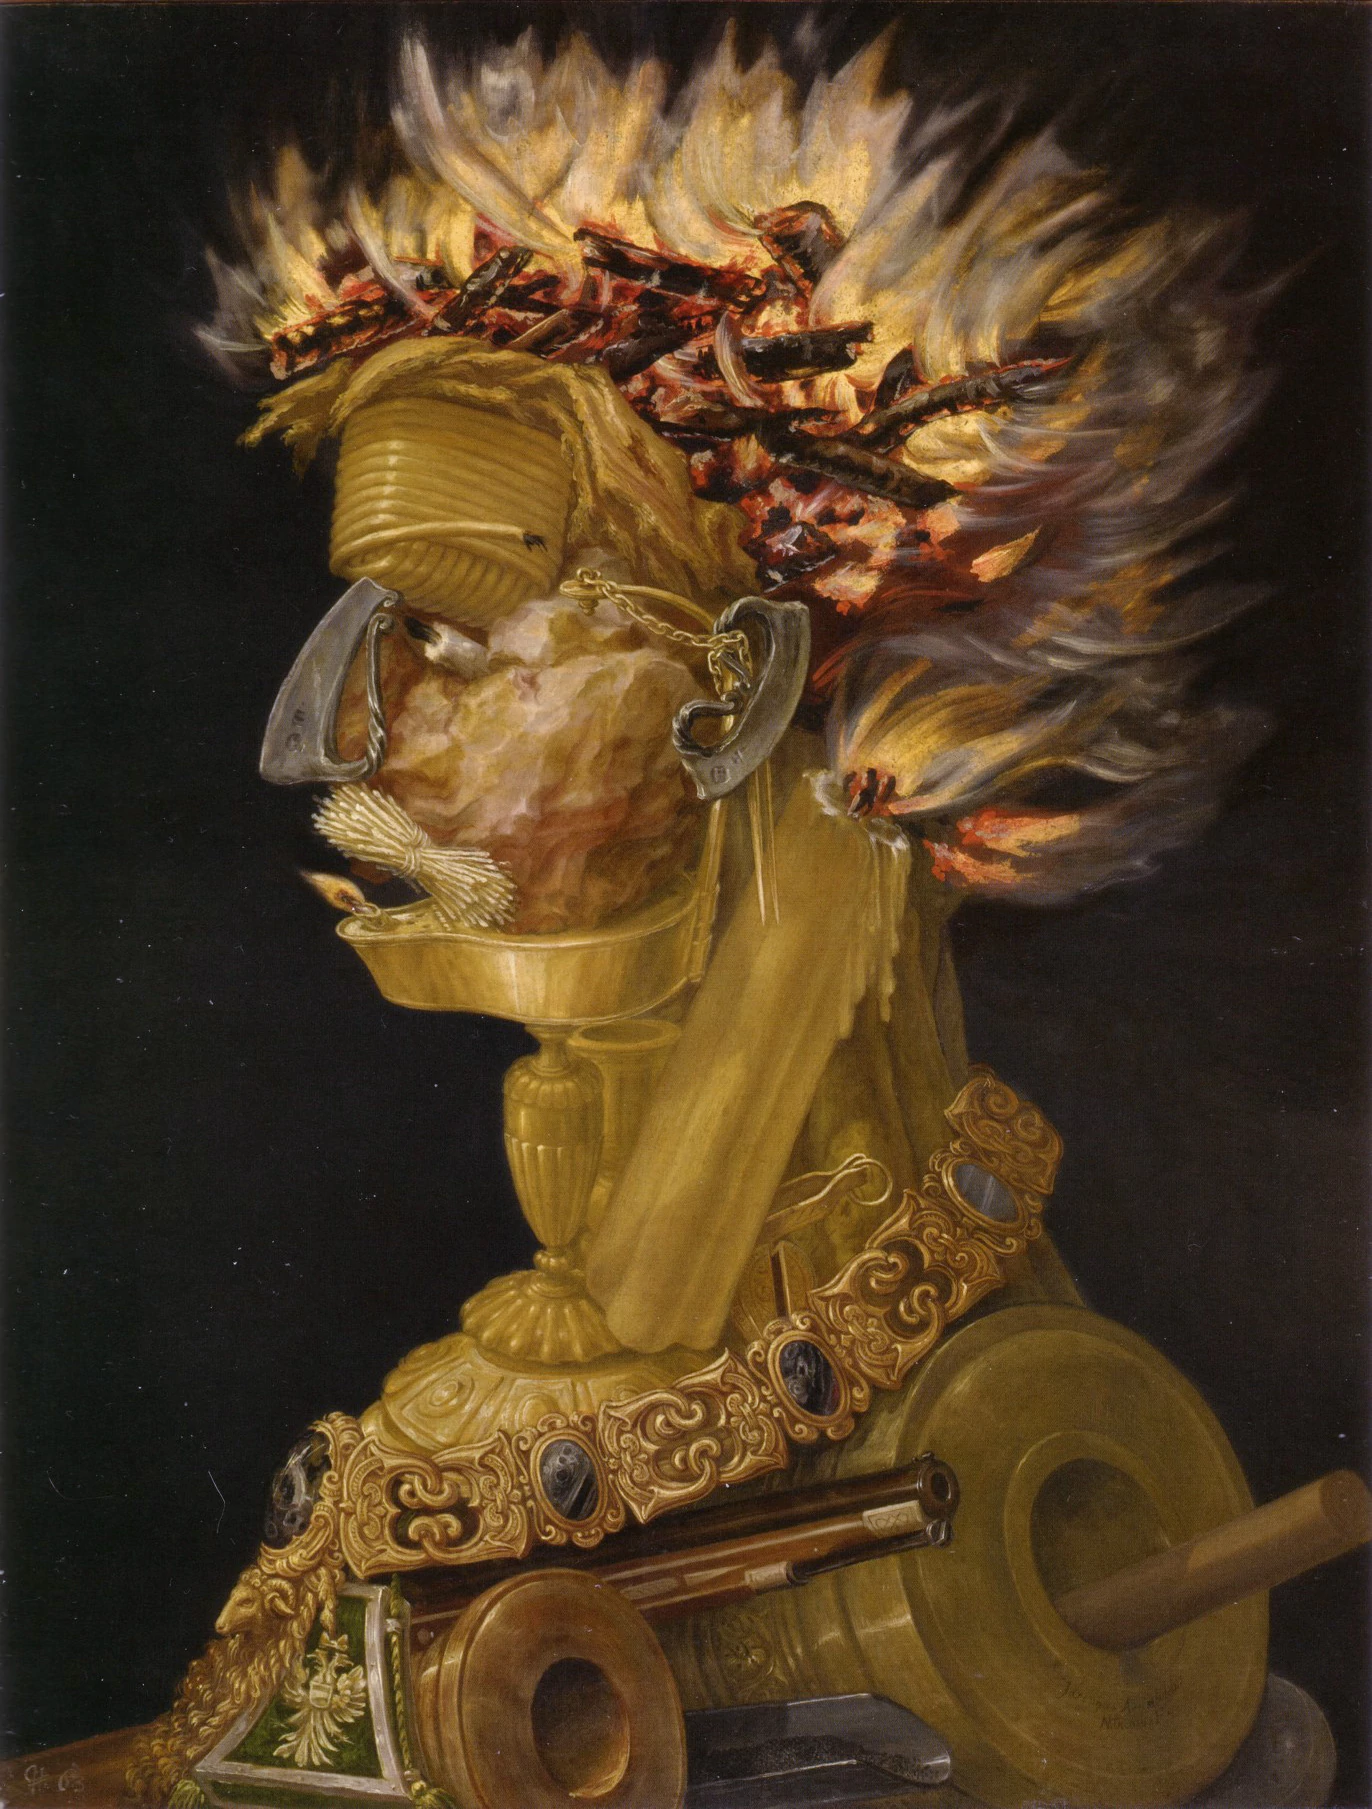 The Fire, Giuseppe Arcimboldo